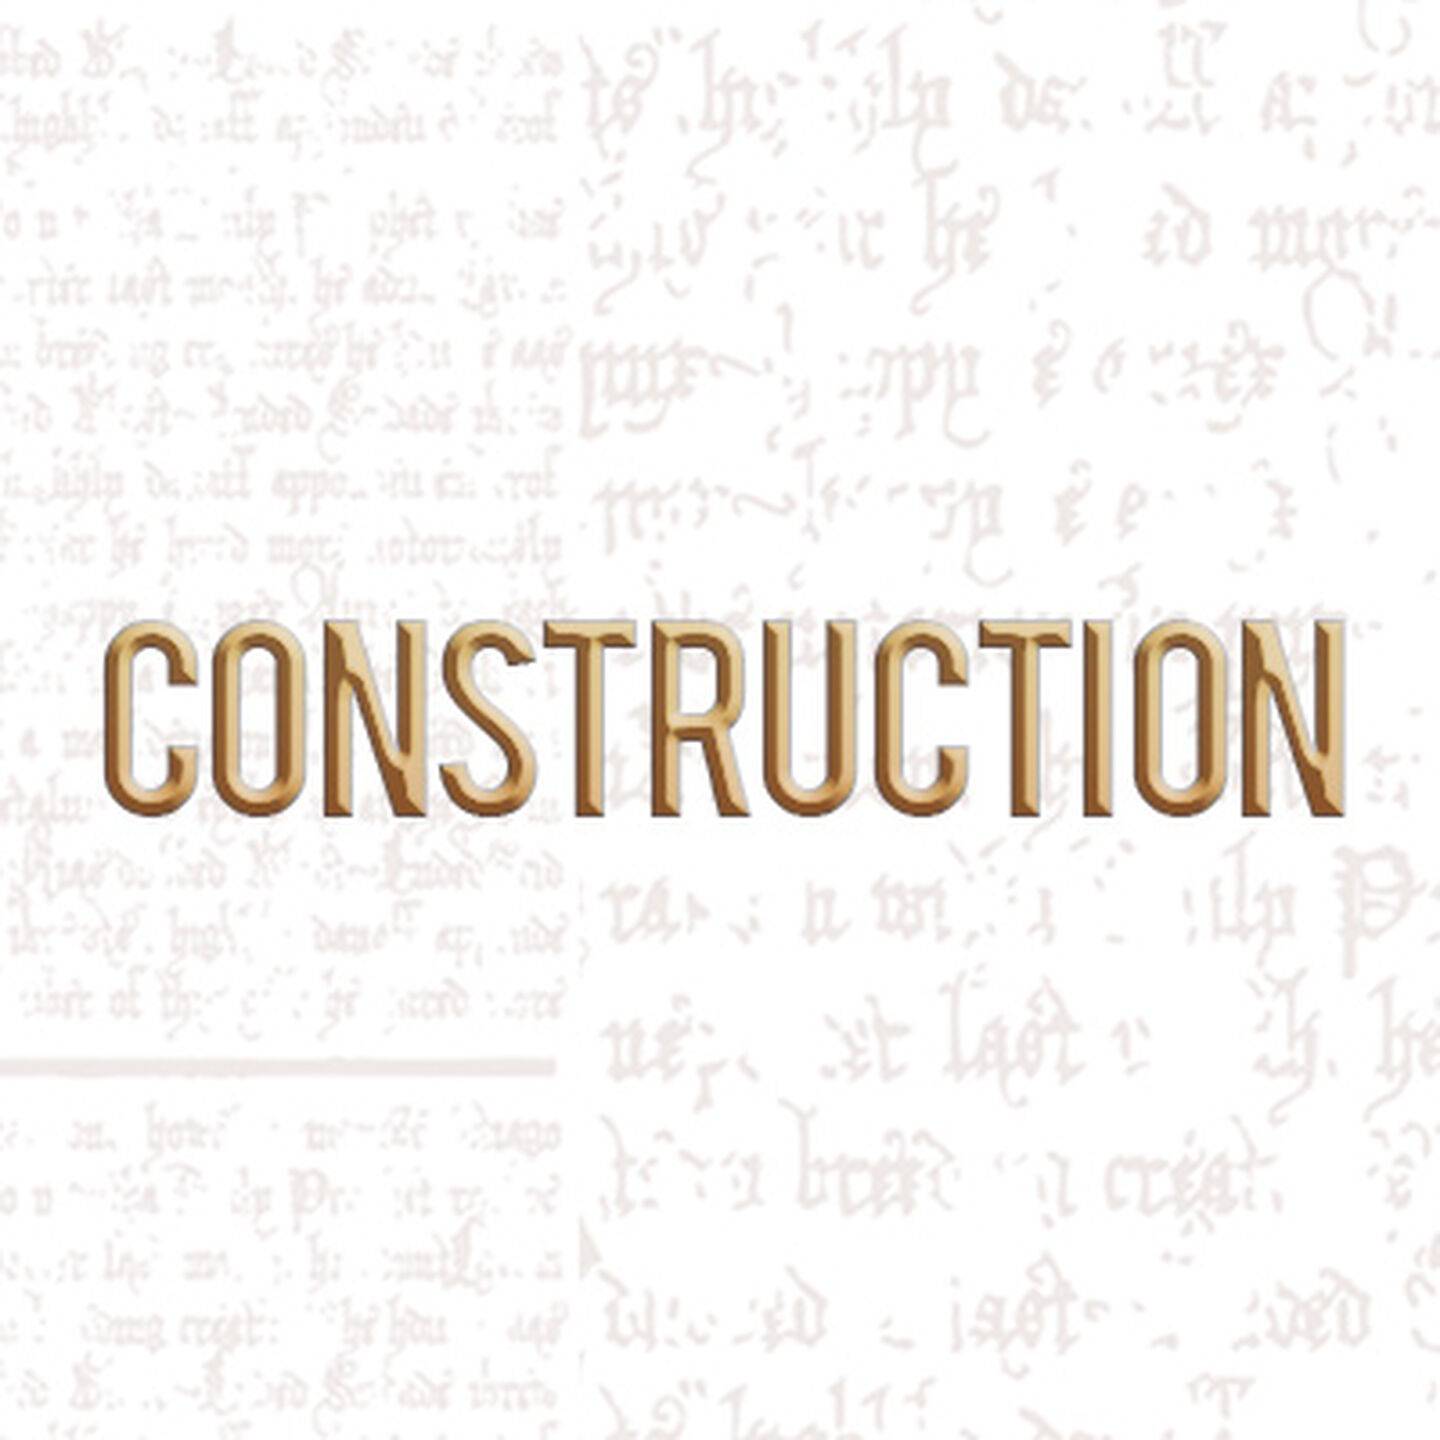 Harry Potter Construction